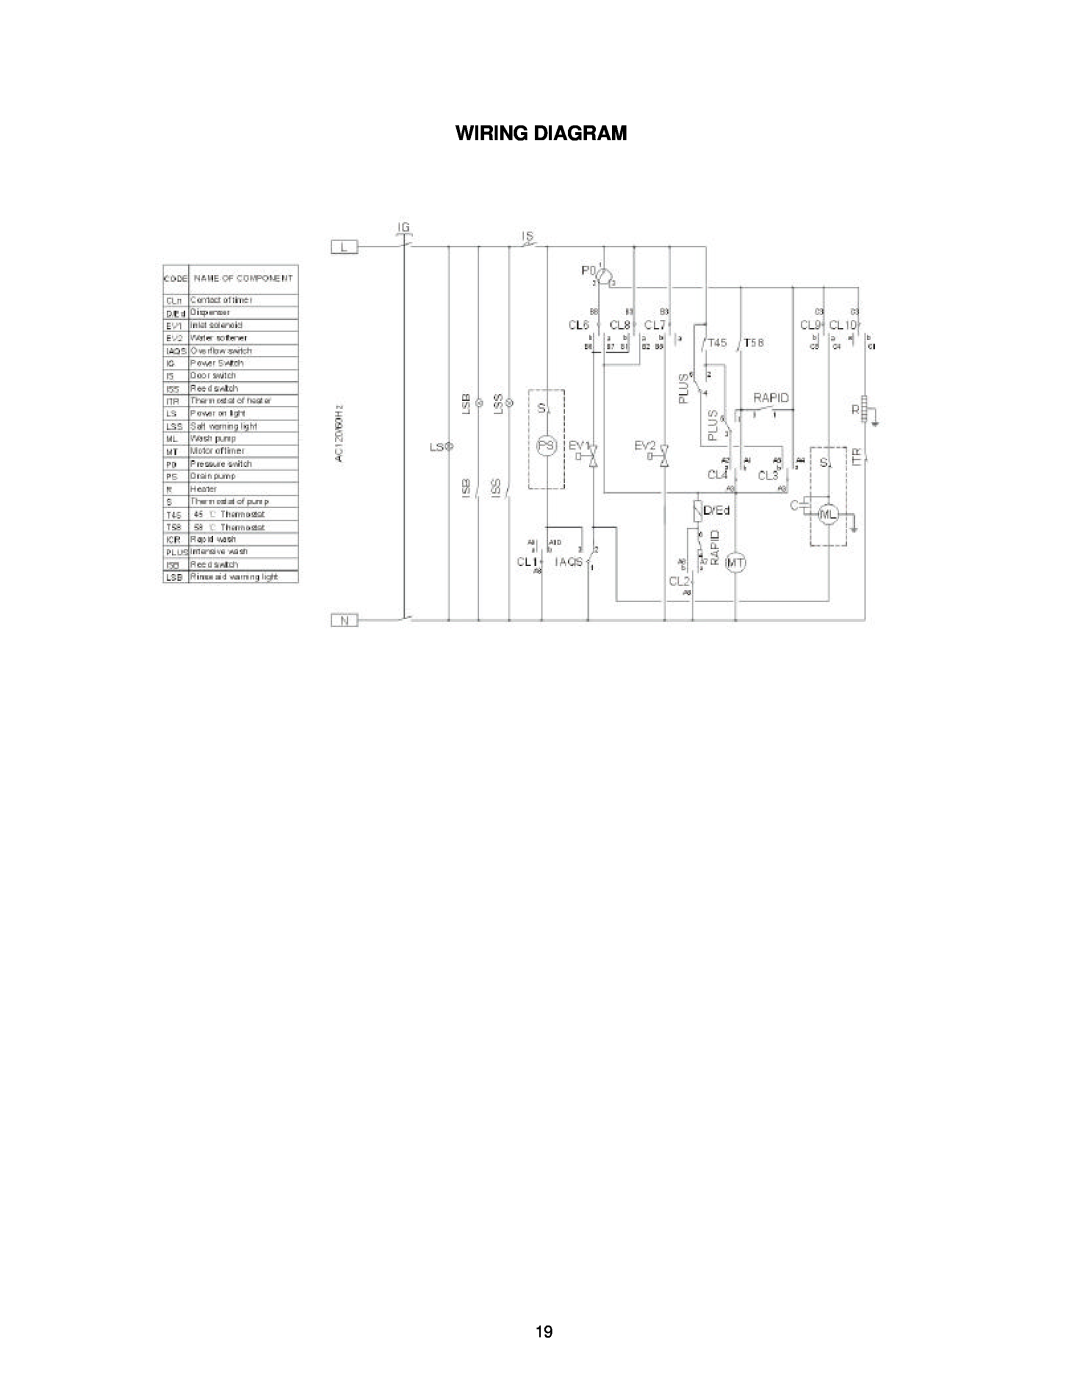 Avanti DW18 instruction manual Wiring Diagram 